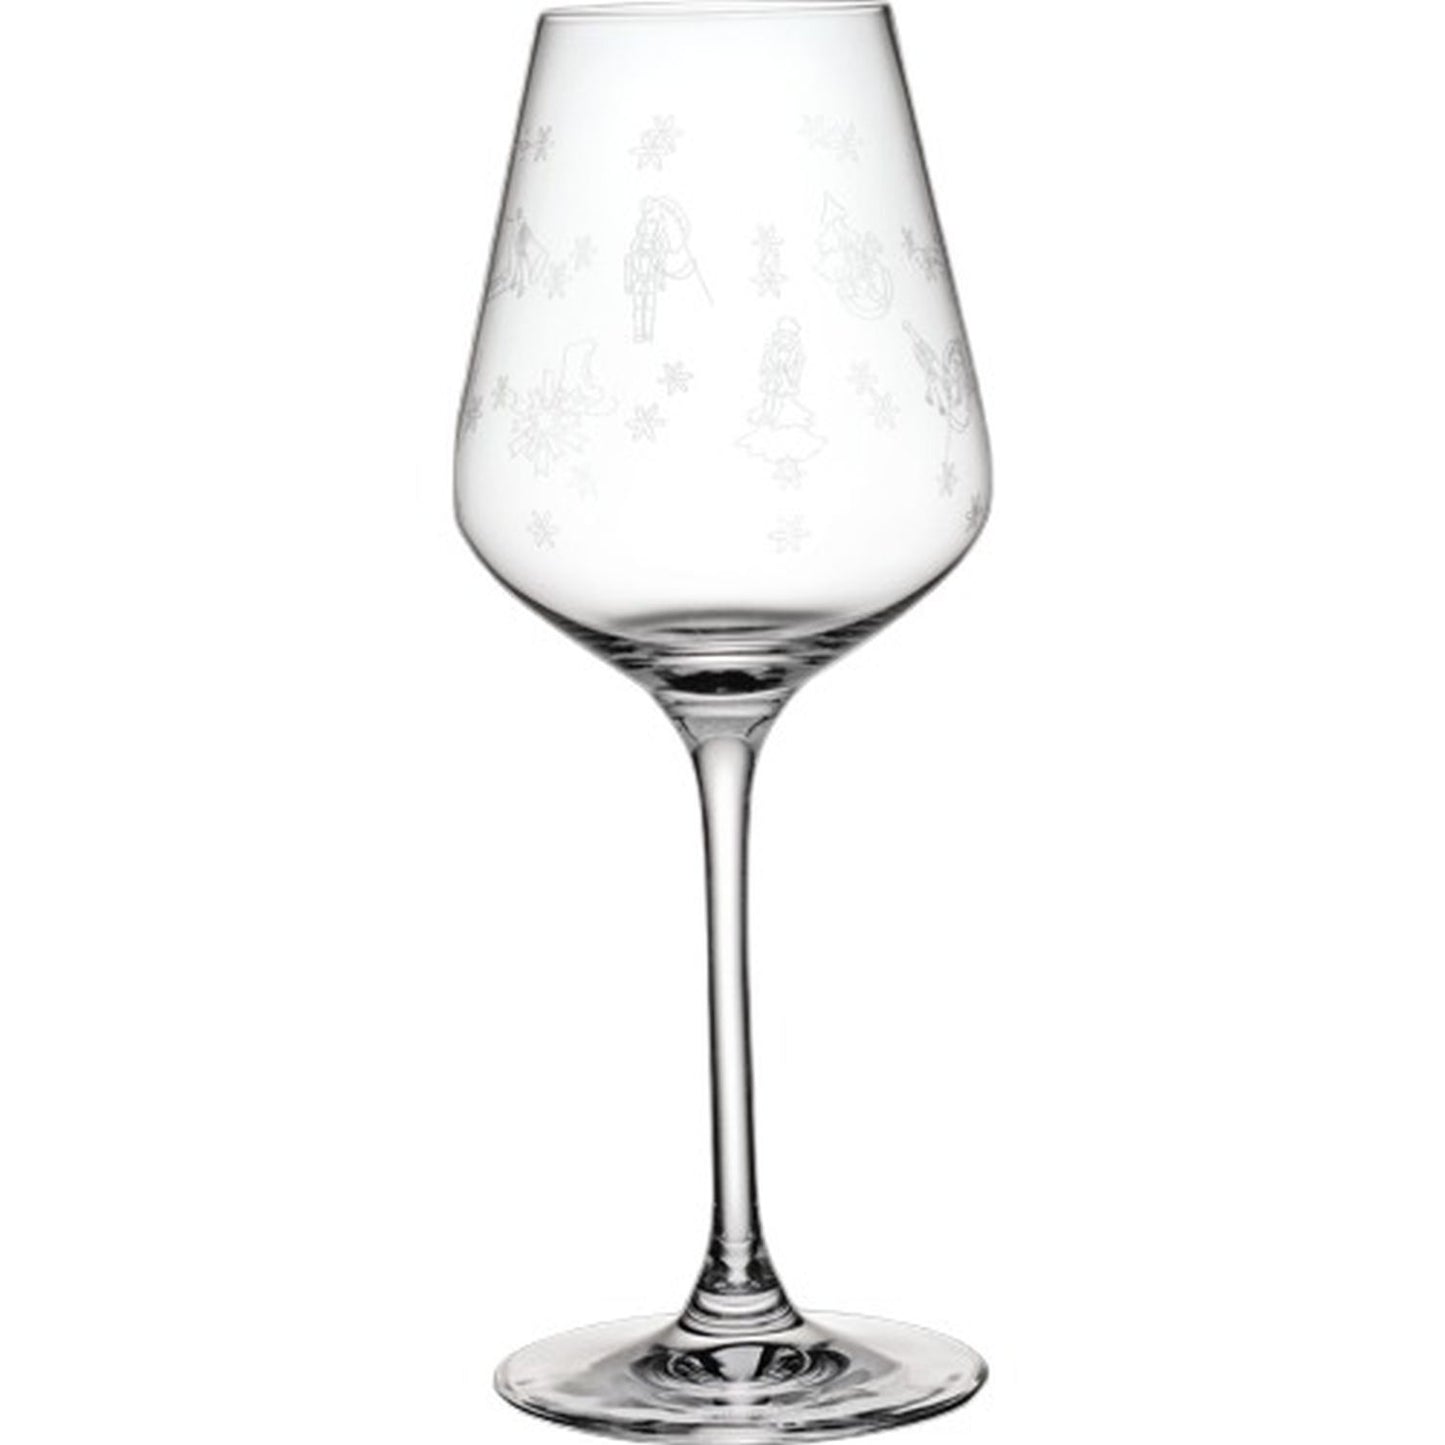 Villeroy & Boch Toy's Delight Stems White Wine Glass, Set of 2, 13oz